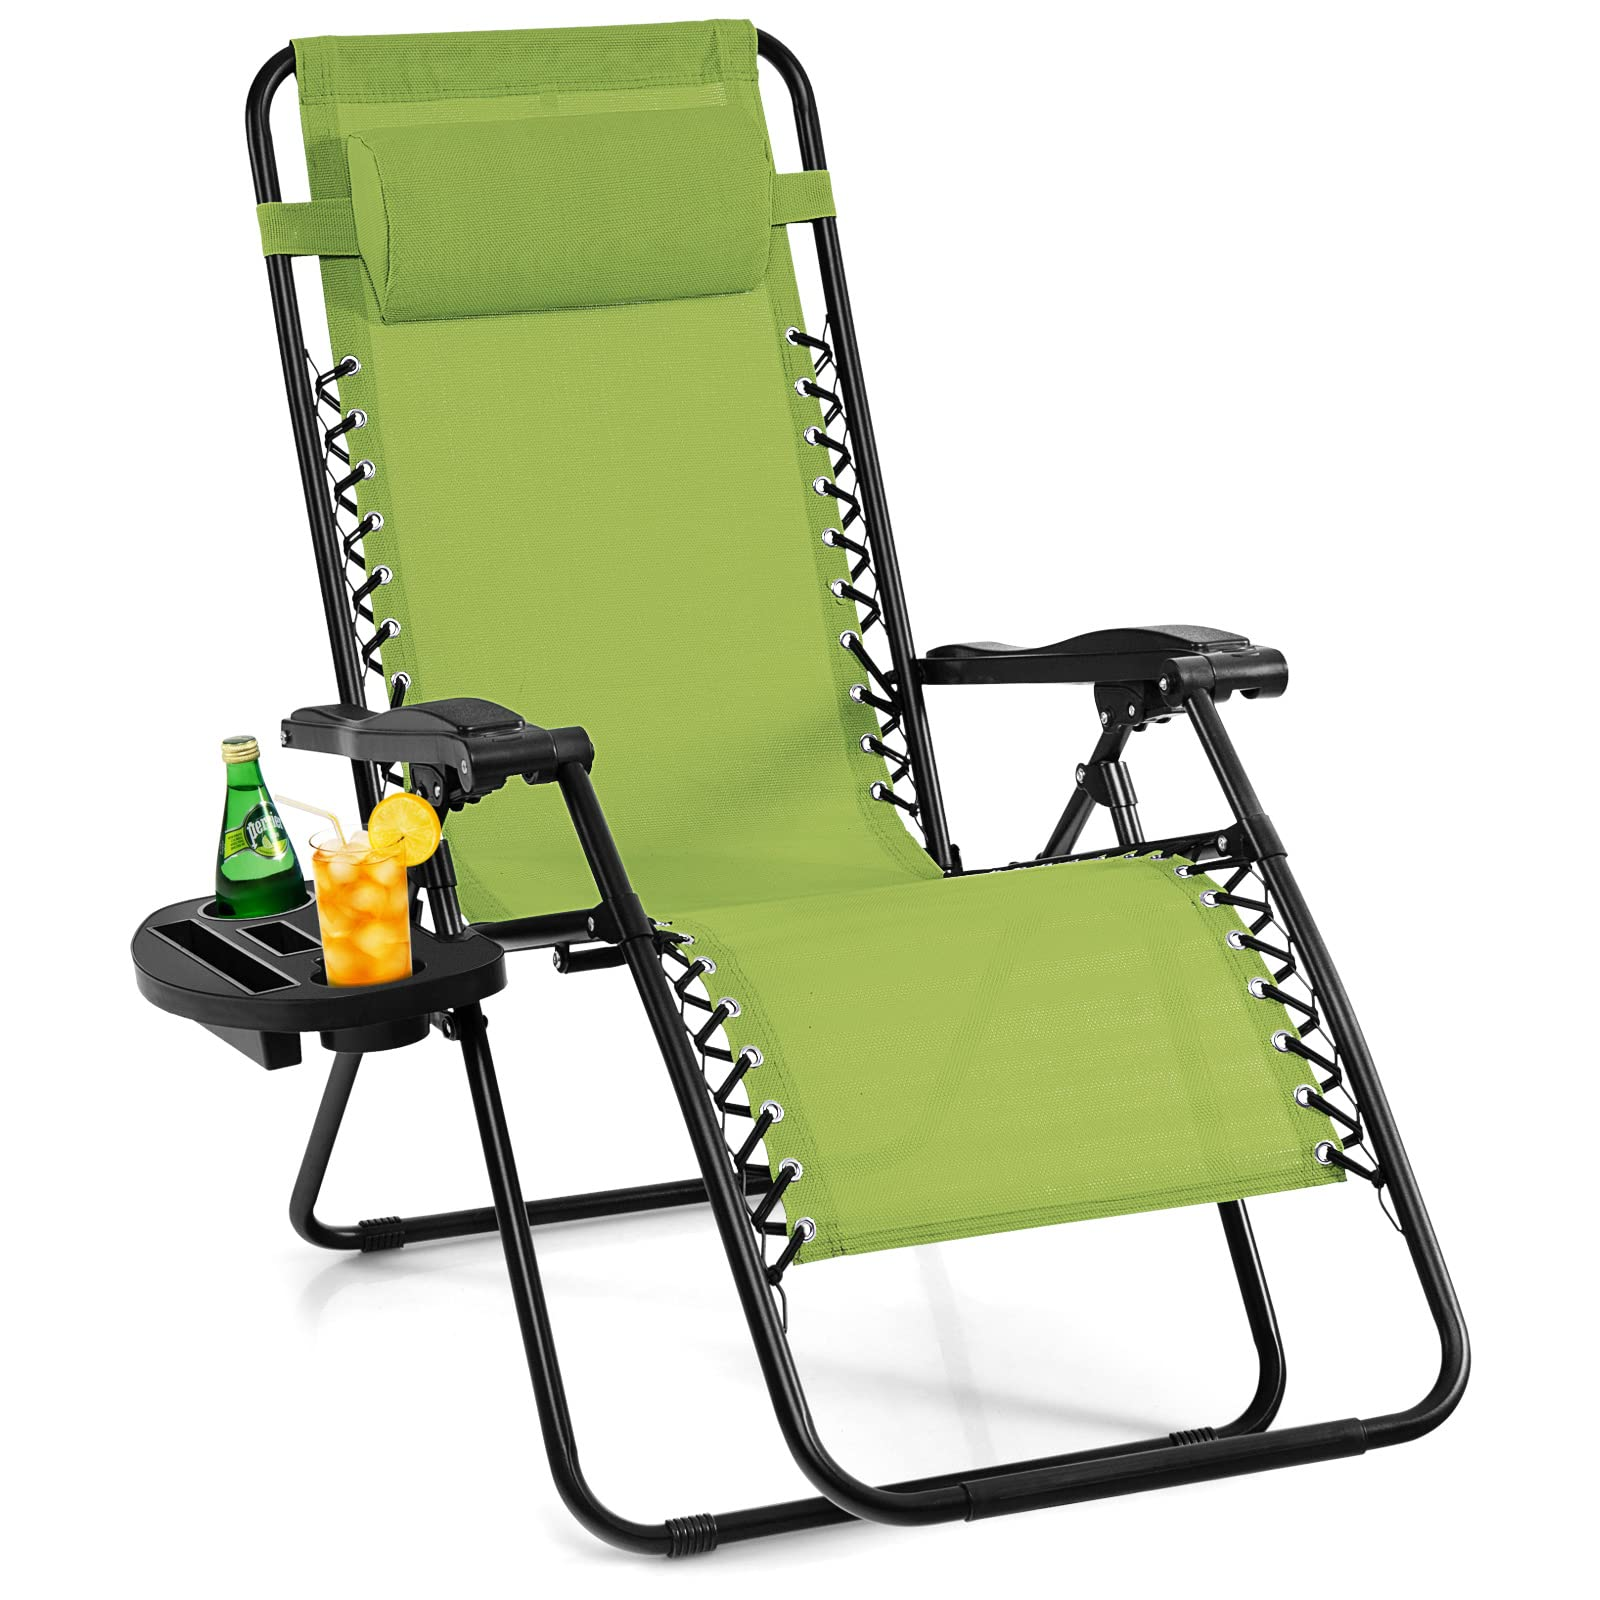 Giantex Zero Gravity Reclining Chair